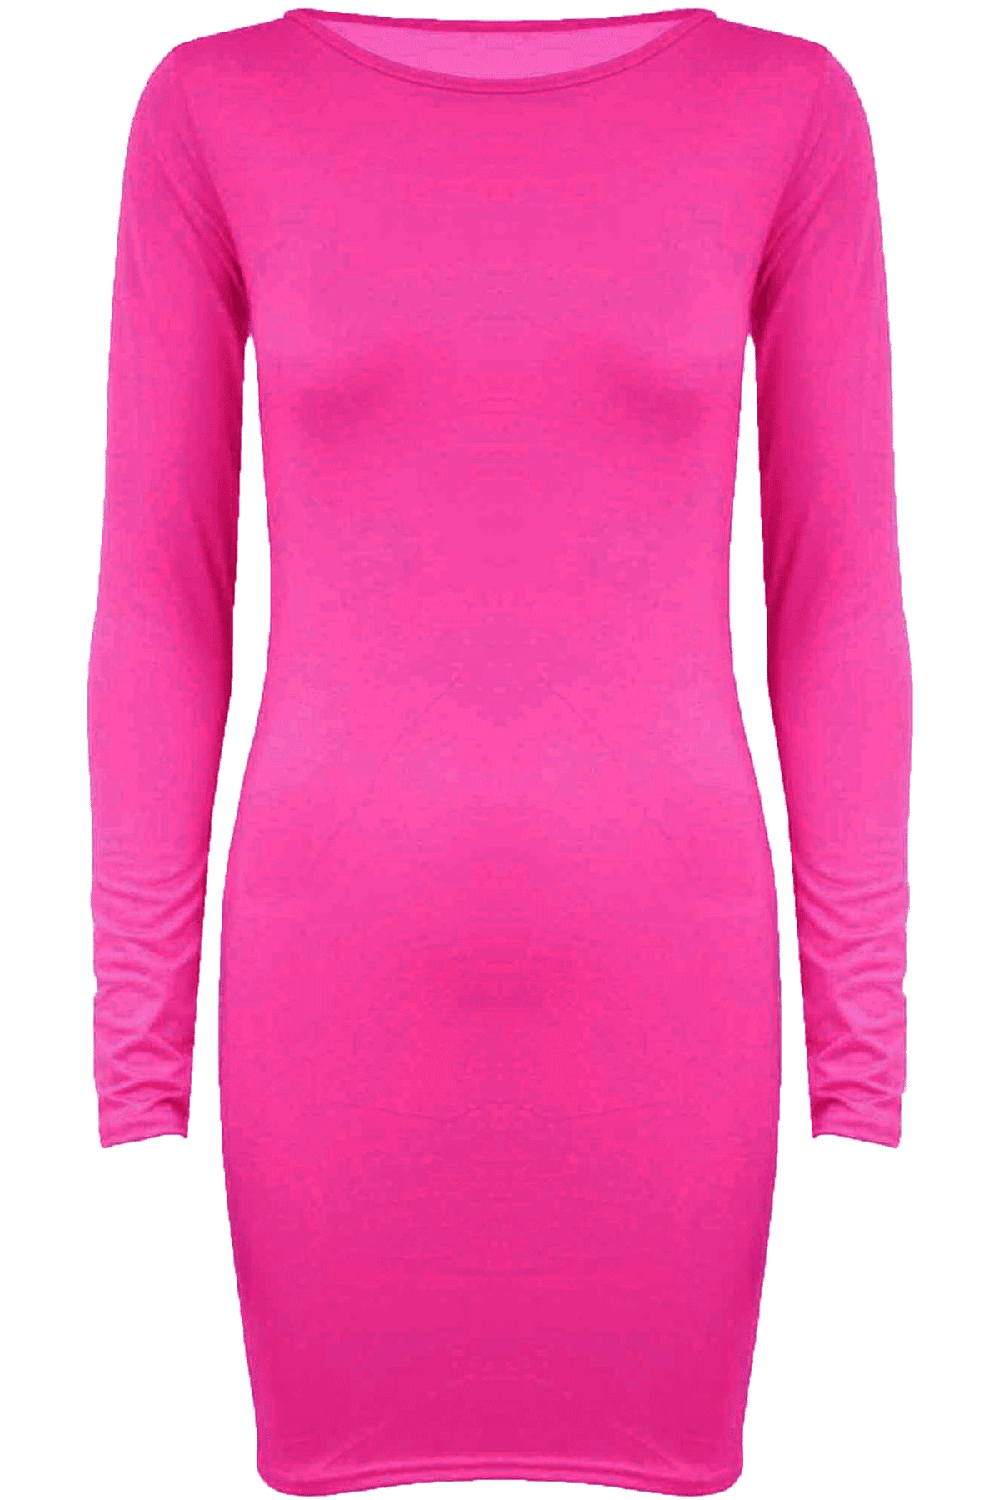 Pink Long Sleeve Basic Bodycon Mini Dress - bejealous-com